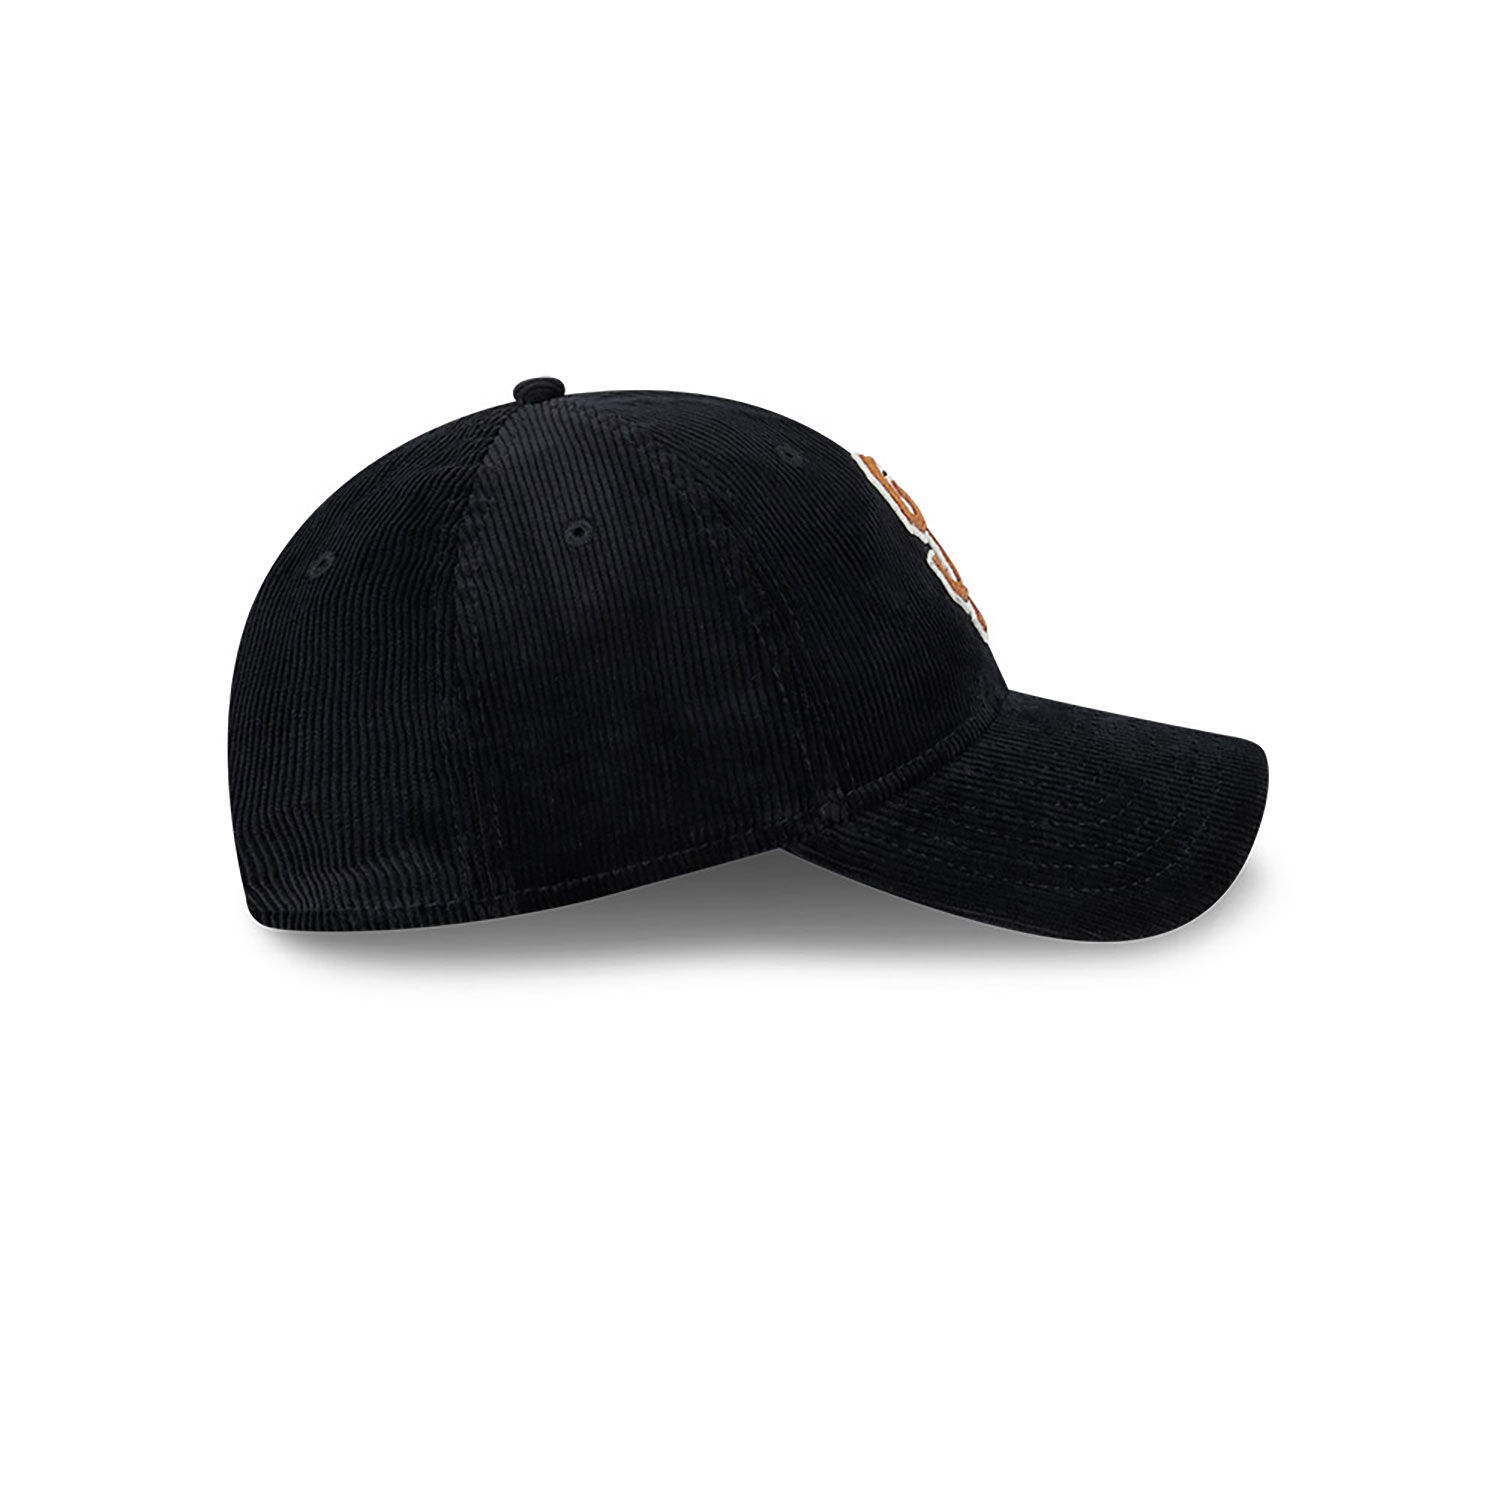 San Francisco Giants Cord Black 9TWENTY Adjustable Cap